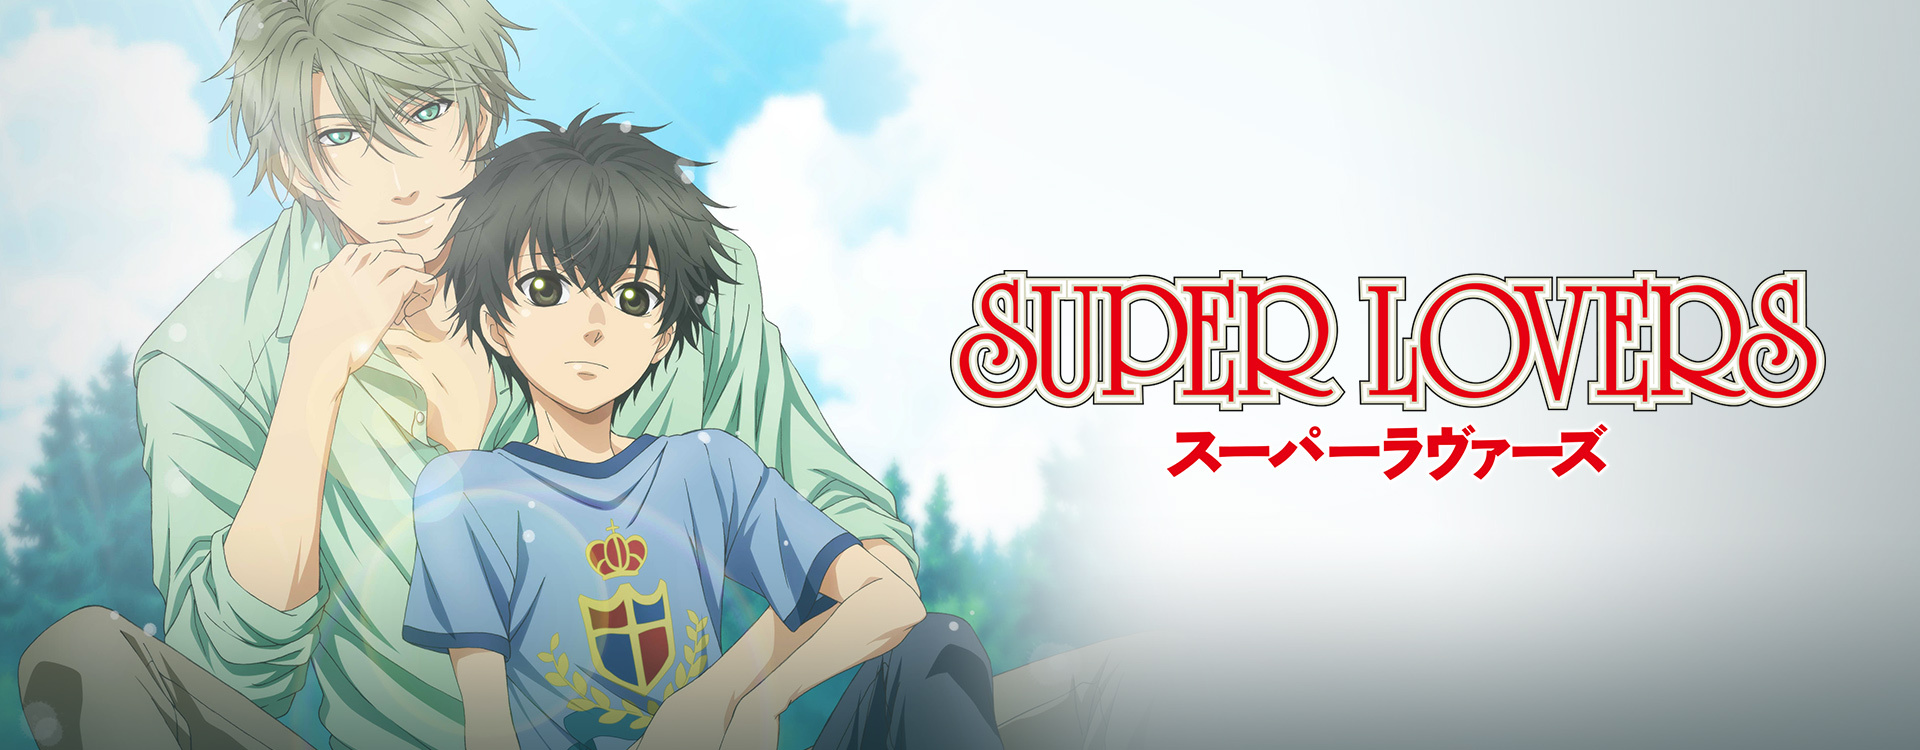 Watch Super Lovers Sub Dub Drama Romance Slice Of Life Anime Funimation